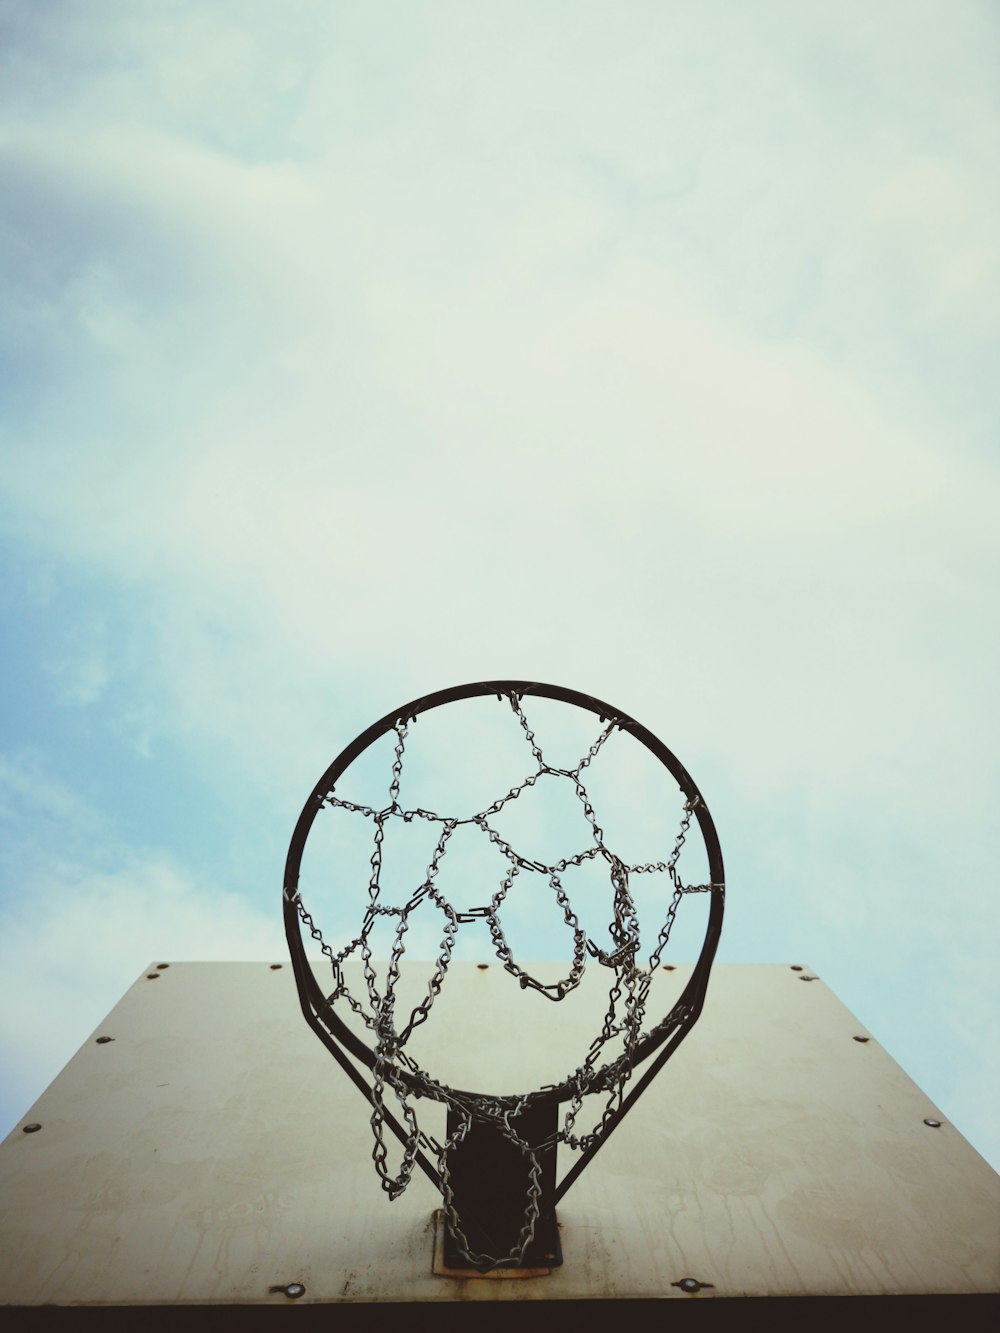 Un canestro da basket su un edificio